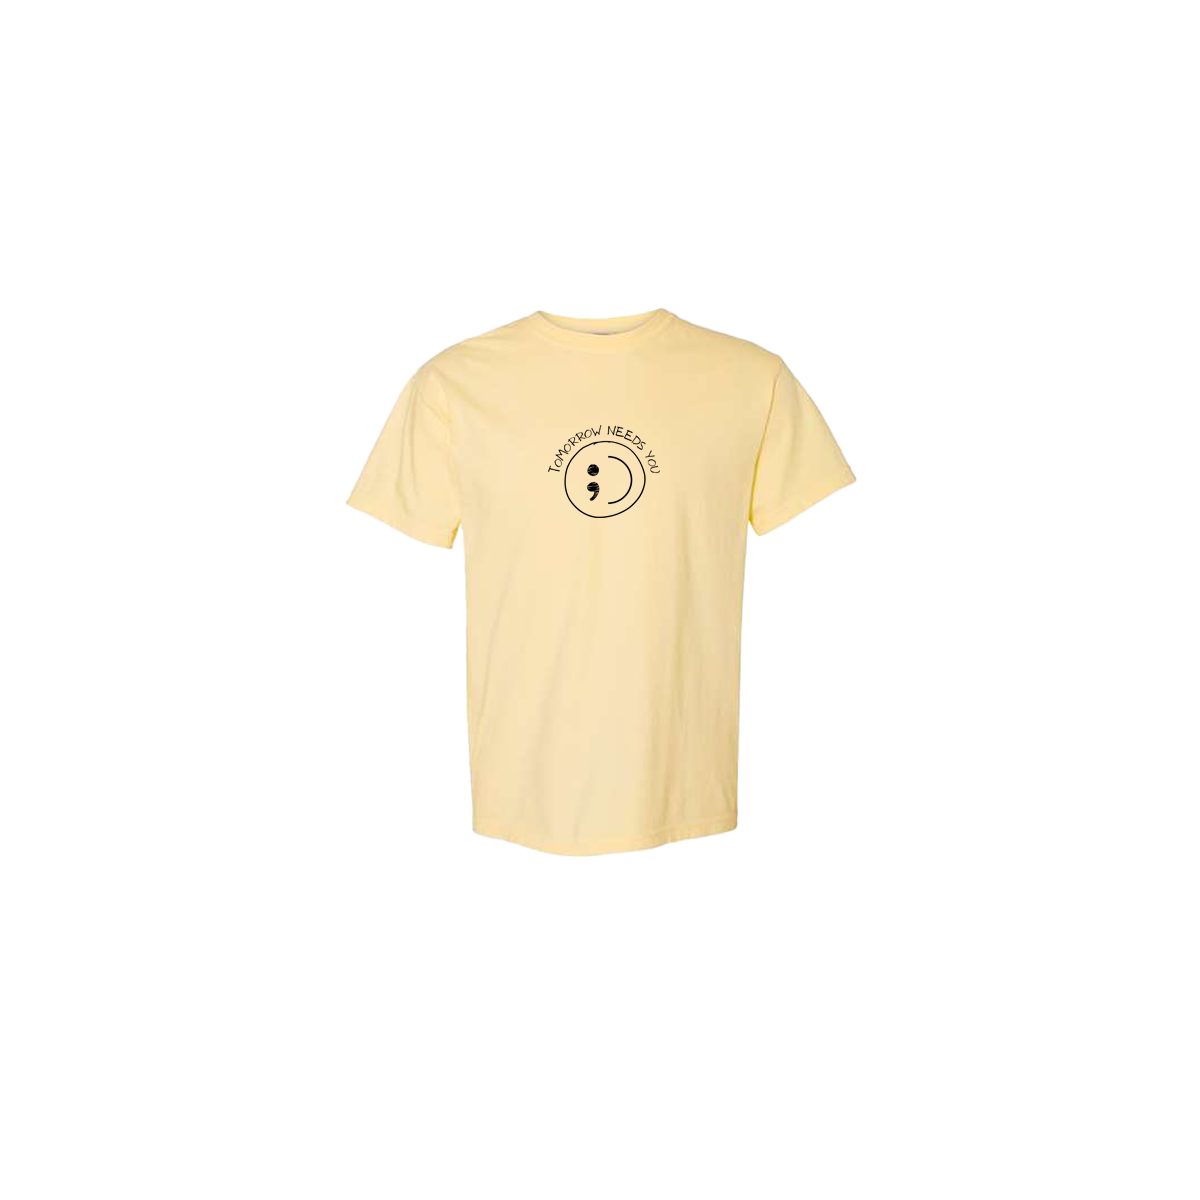 Tomorrow Needs You Embroidered Yellow Tshirt - Mental Health Awareness Clothing